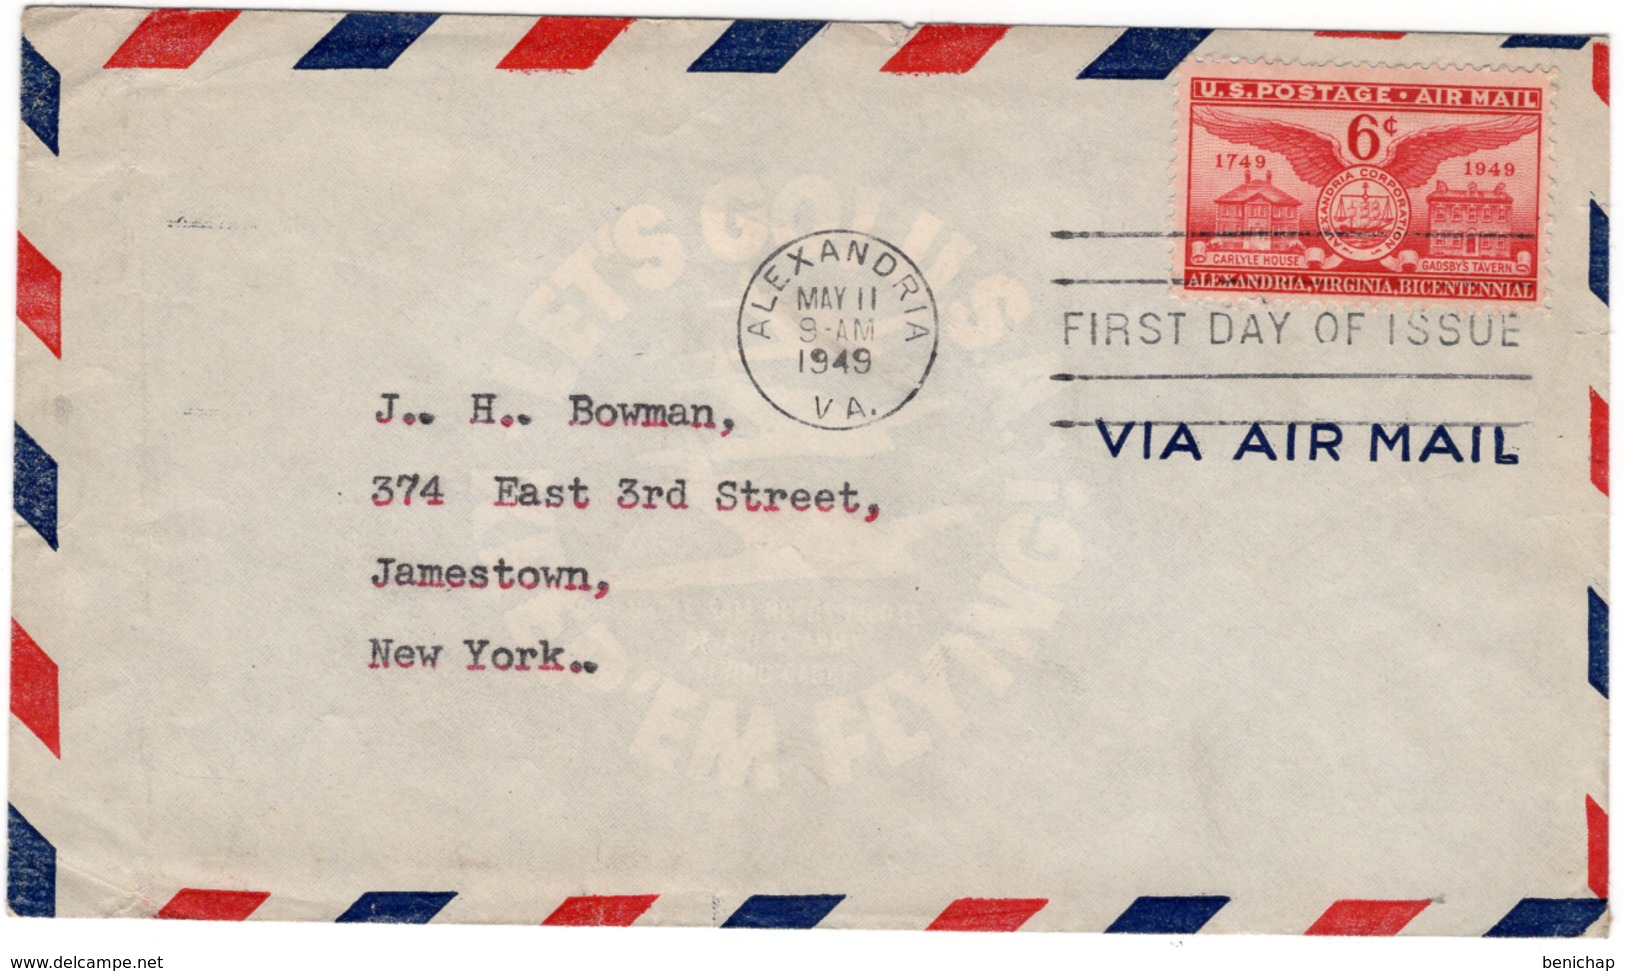 (R24) SCOTT C40 - FDI - VIA AIR MAIL - ALEXANDRIA - NEW YORK - 1949. - 2c. 1941-1960 Lettres